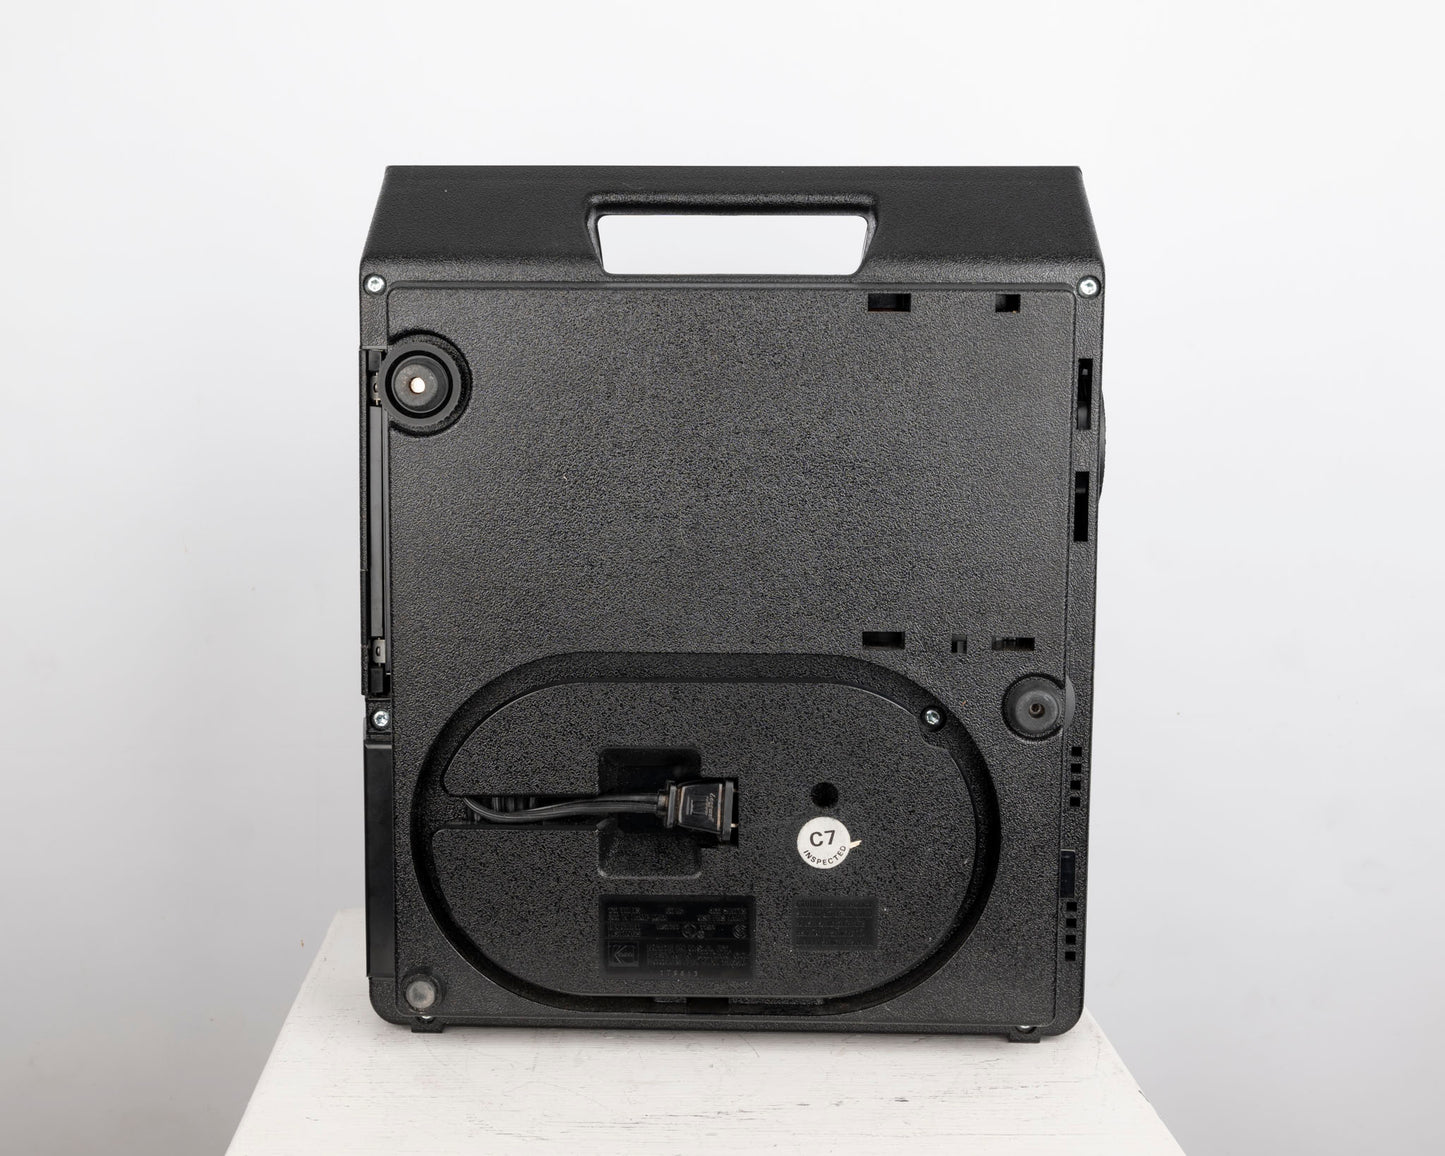 Kodak Carousel 4600 35mm slide projector w/ Ektanar C 102mm f2.8 lens (serial 179613)